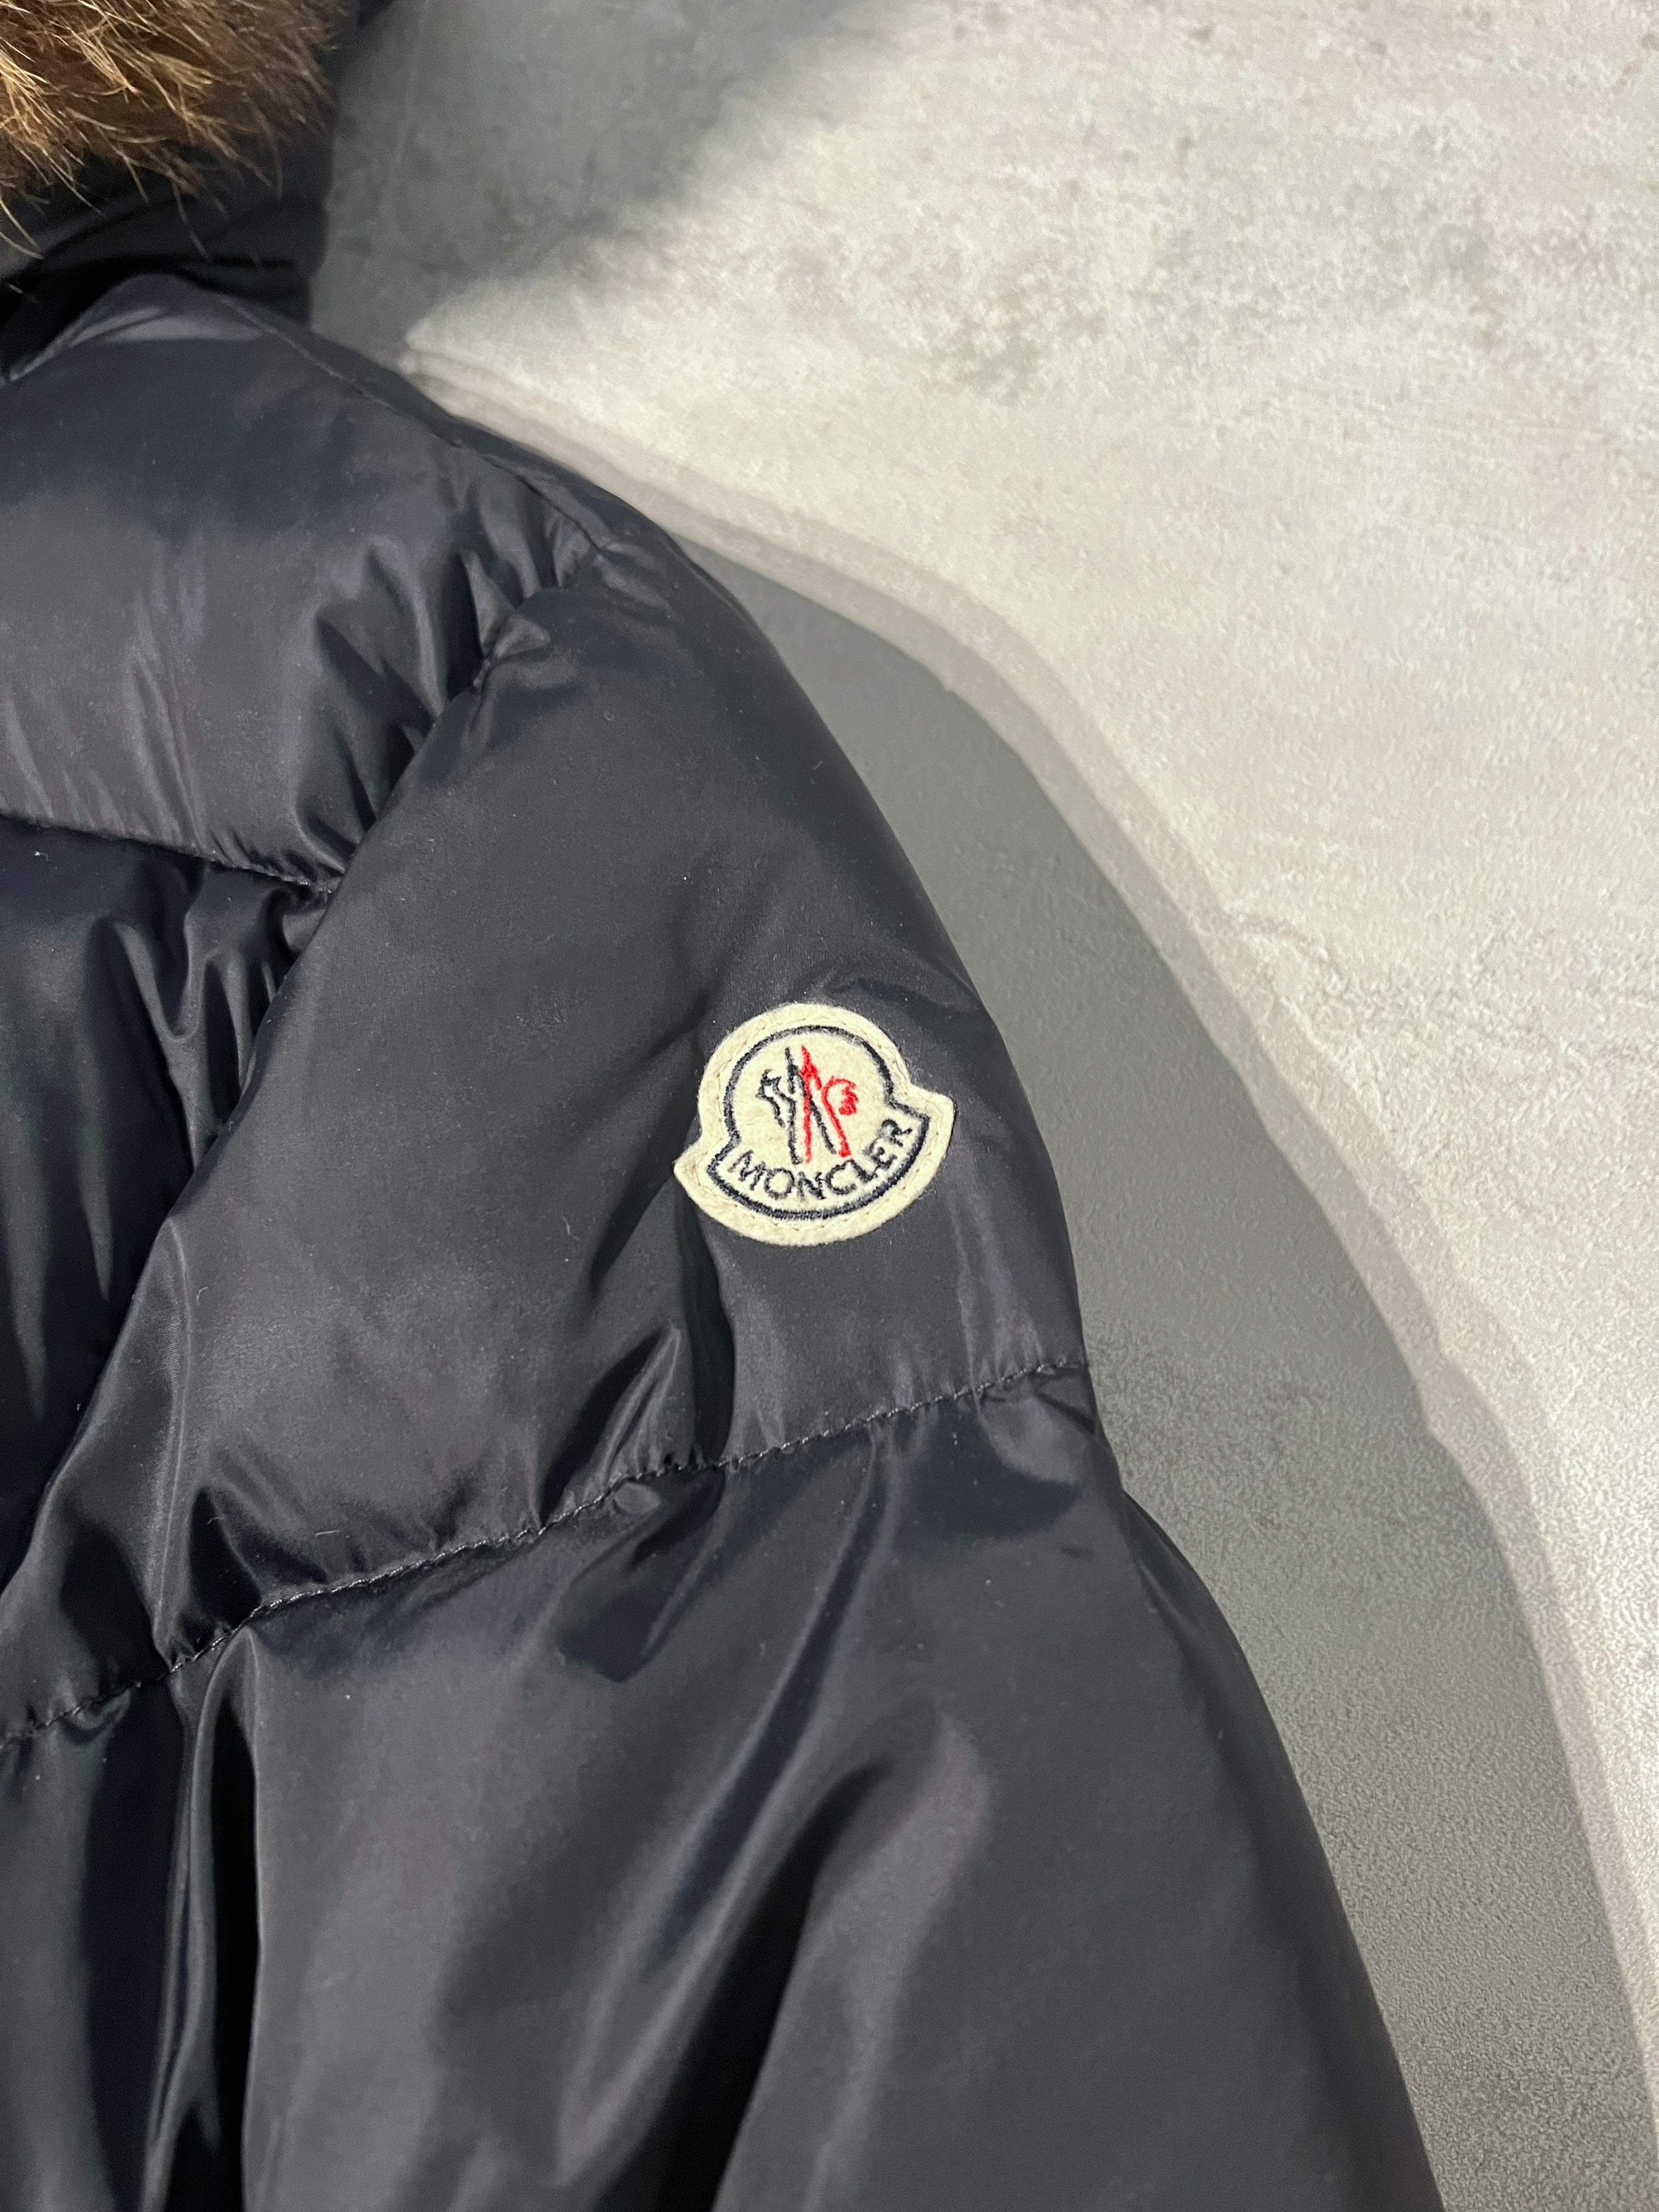 Moncler Senega Parka Jacket - Size 4